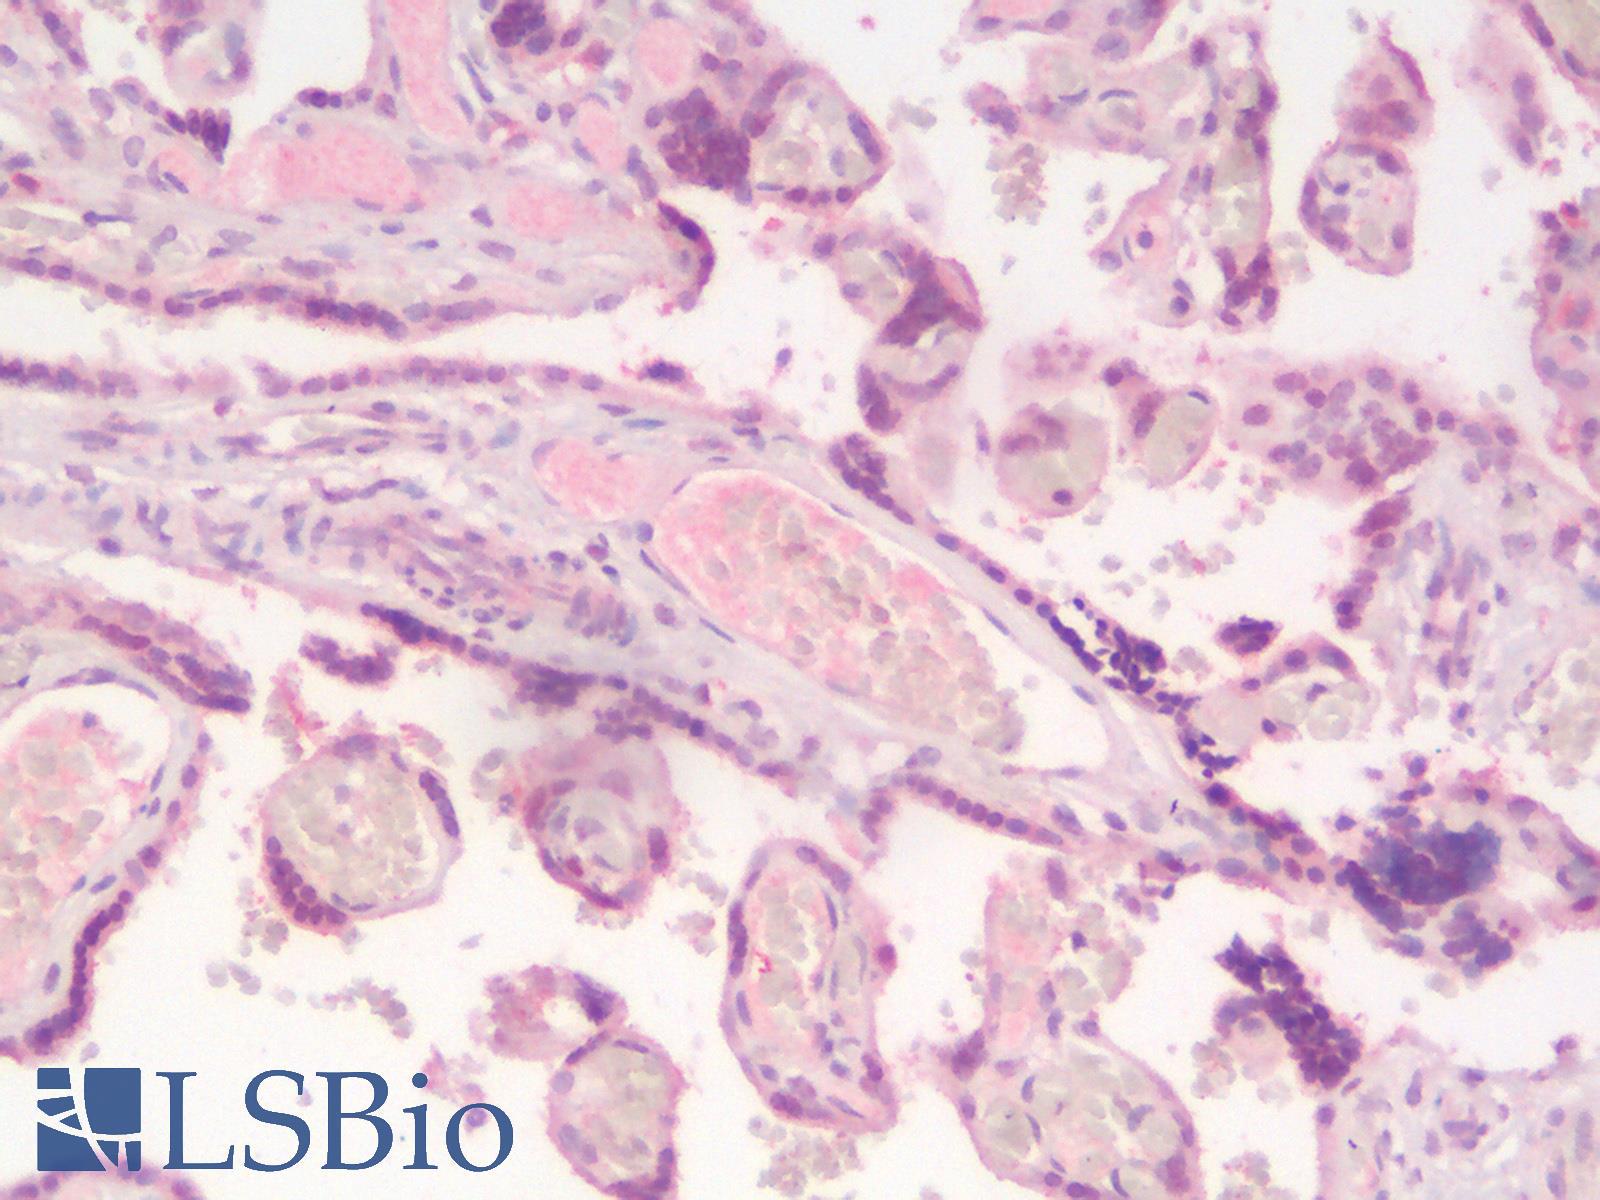 SOX2 Antibody - Human Placenta: Formalin-Fixed, Paraffin-Embedded (FFPE)